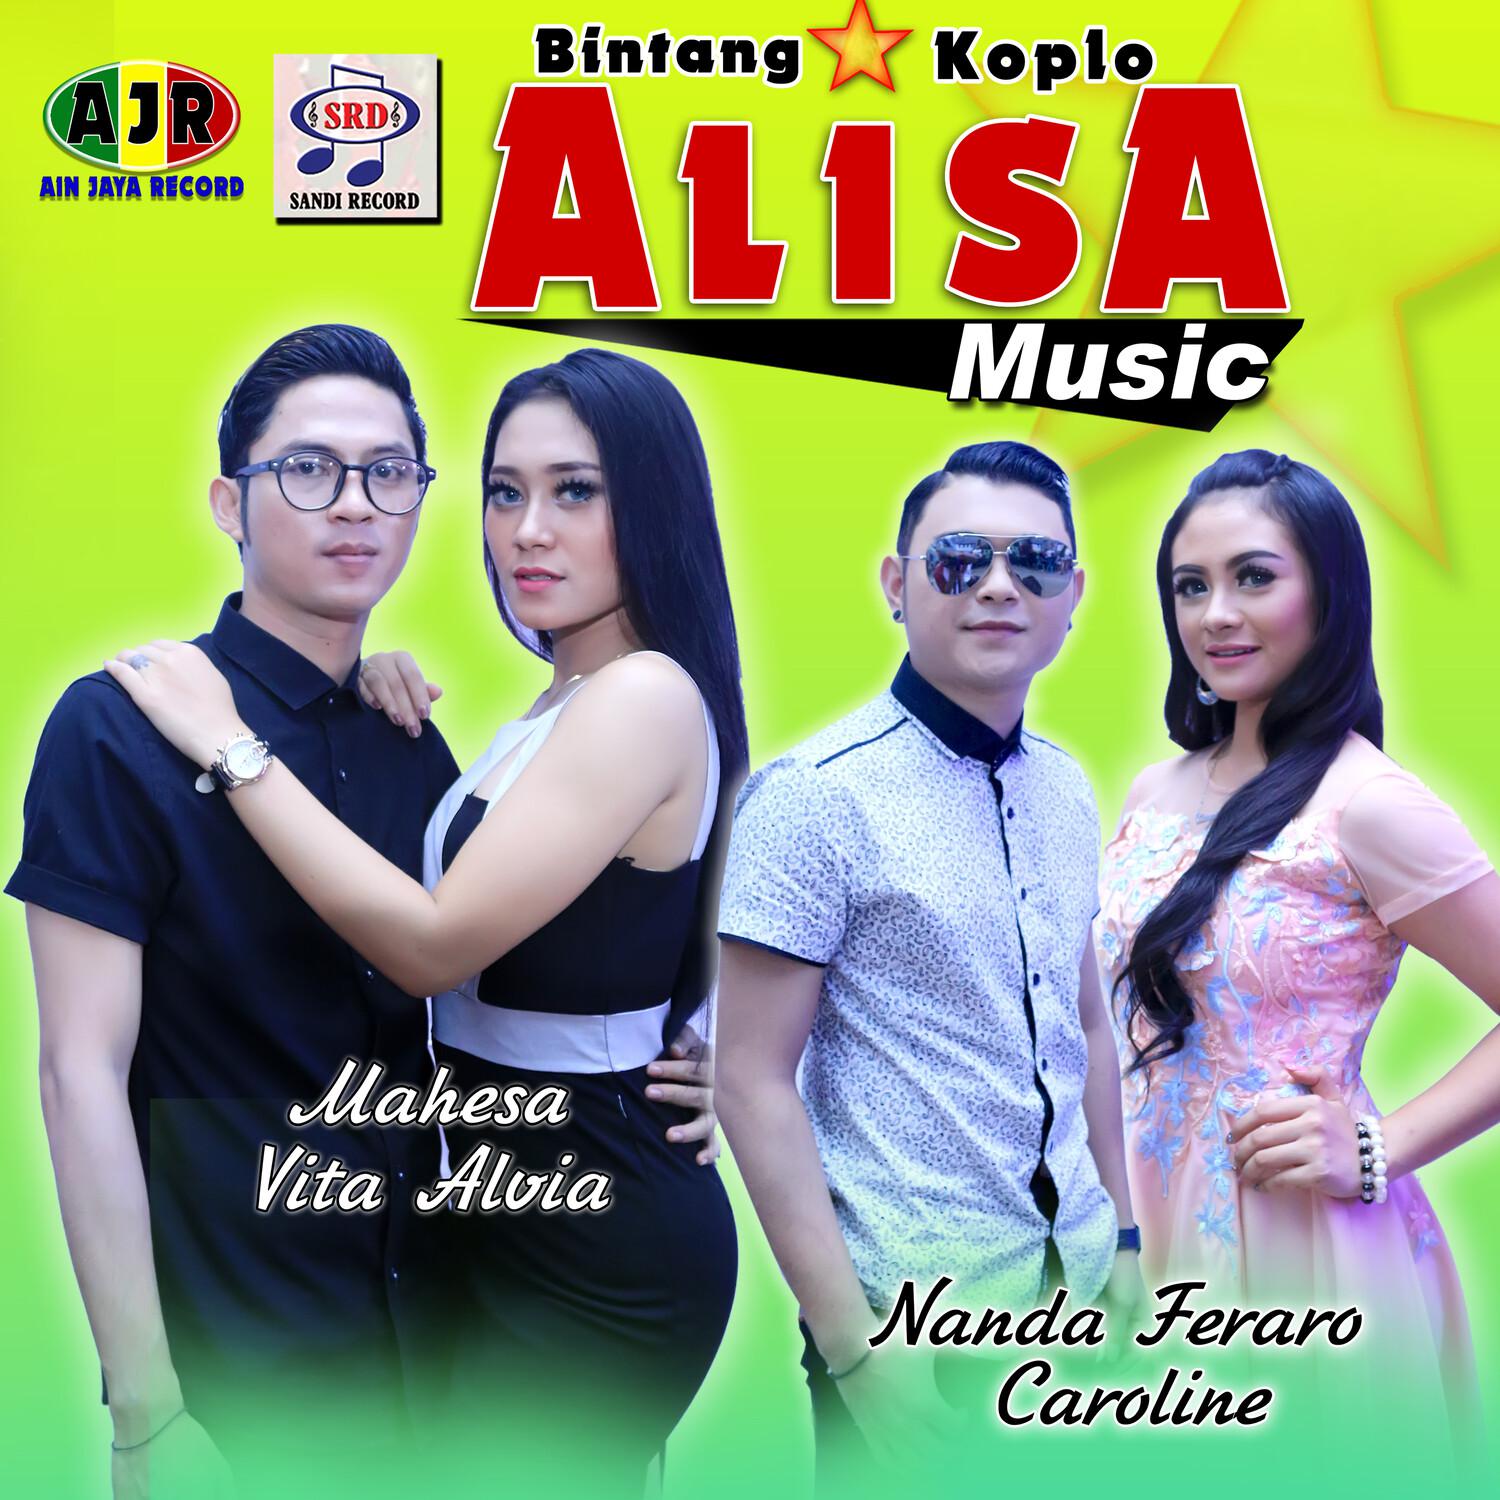 Bintang Koplo Alisa Music